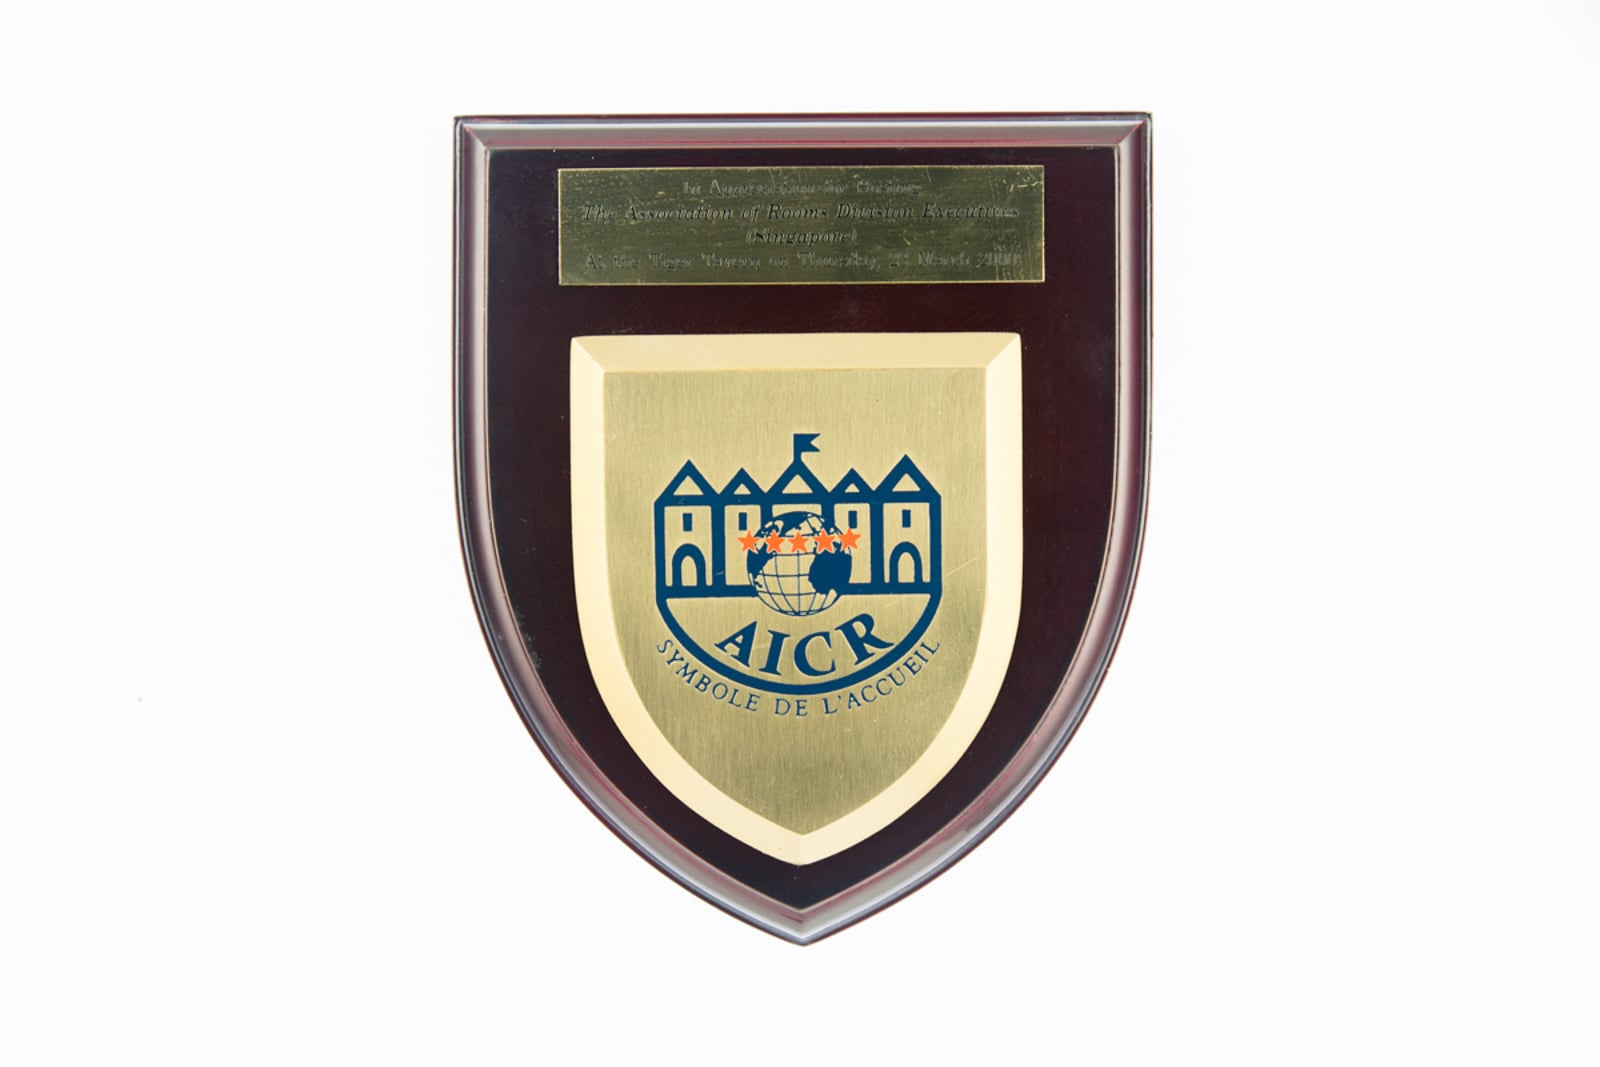 AICR Symbole de L'Accueil Plaque 2000